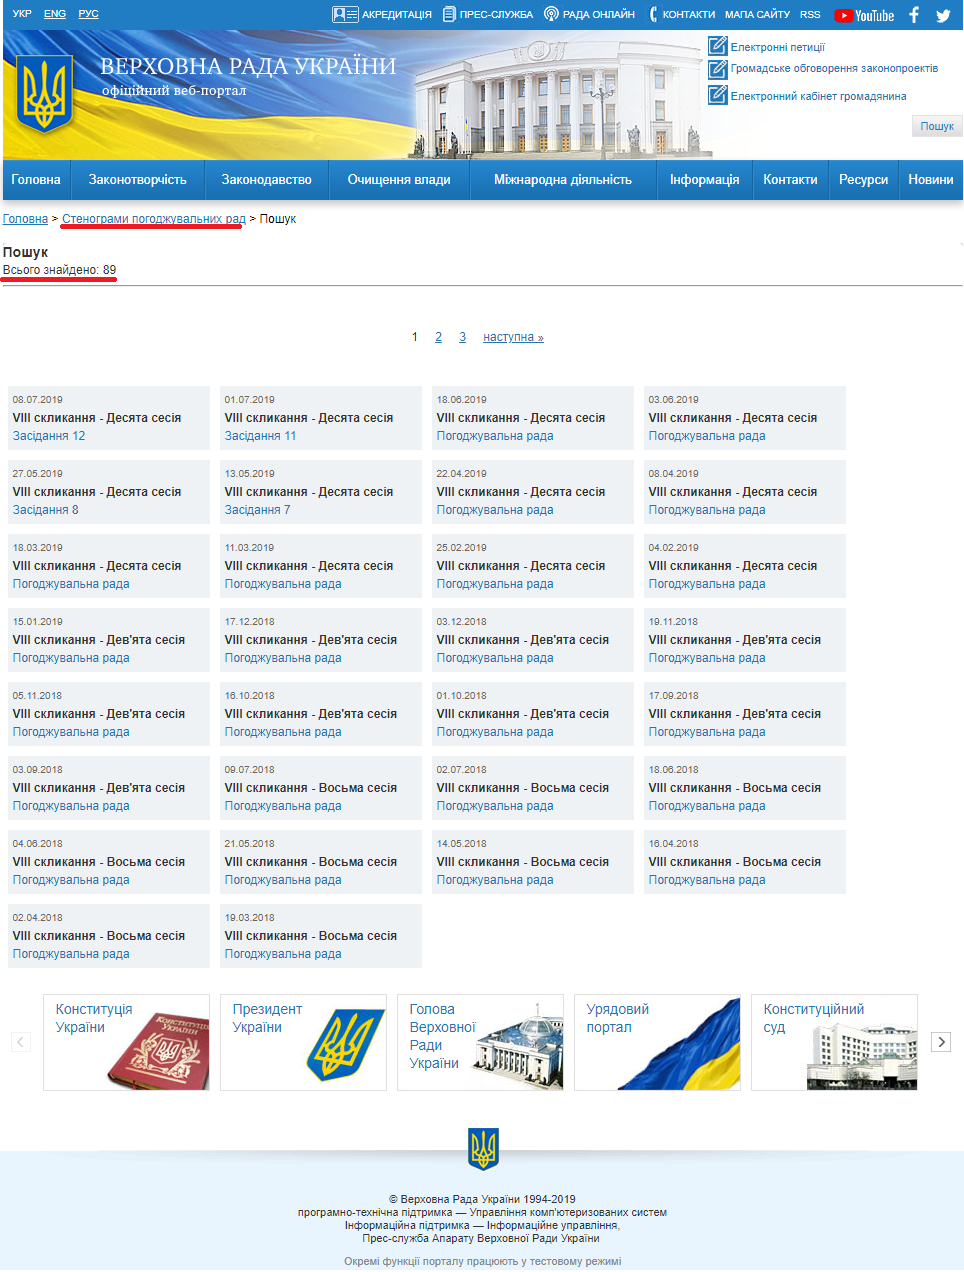 https://iportal.rada.gov.ua/meeting/search?search_convocation=8&search_session=0&search_string=&search_type=4&submit=%D0%97%D0%BD%D0%B0%D0%B9%D1%82%D0%B8